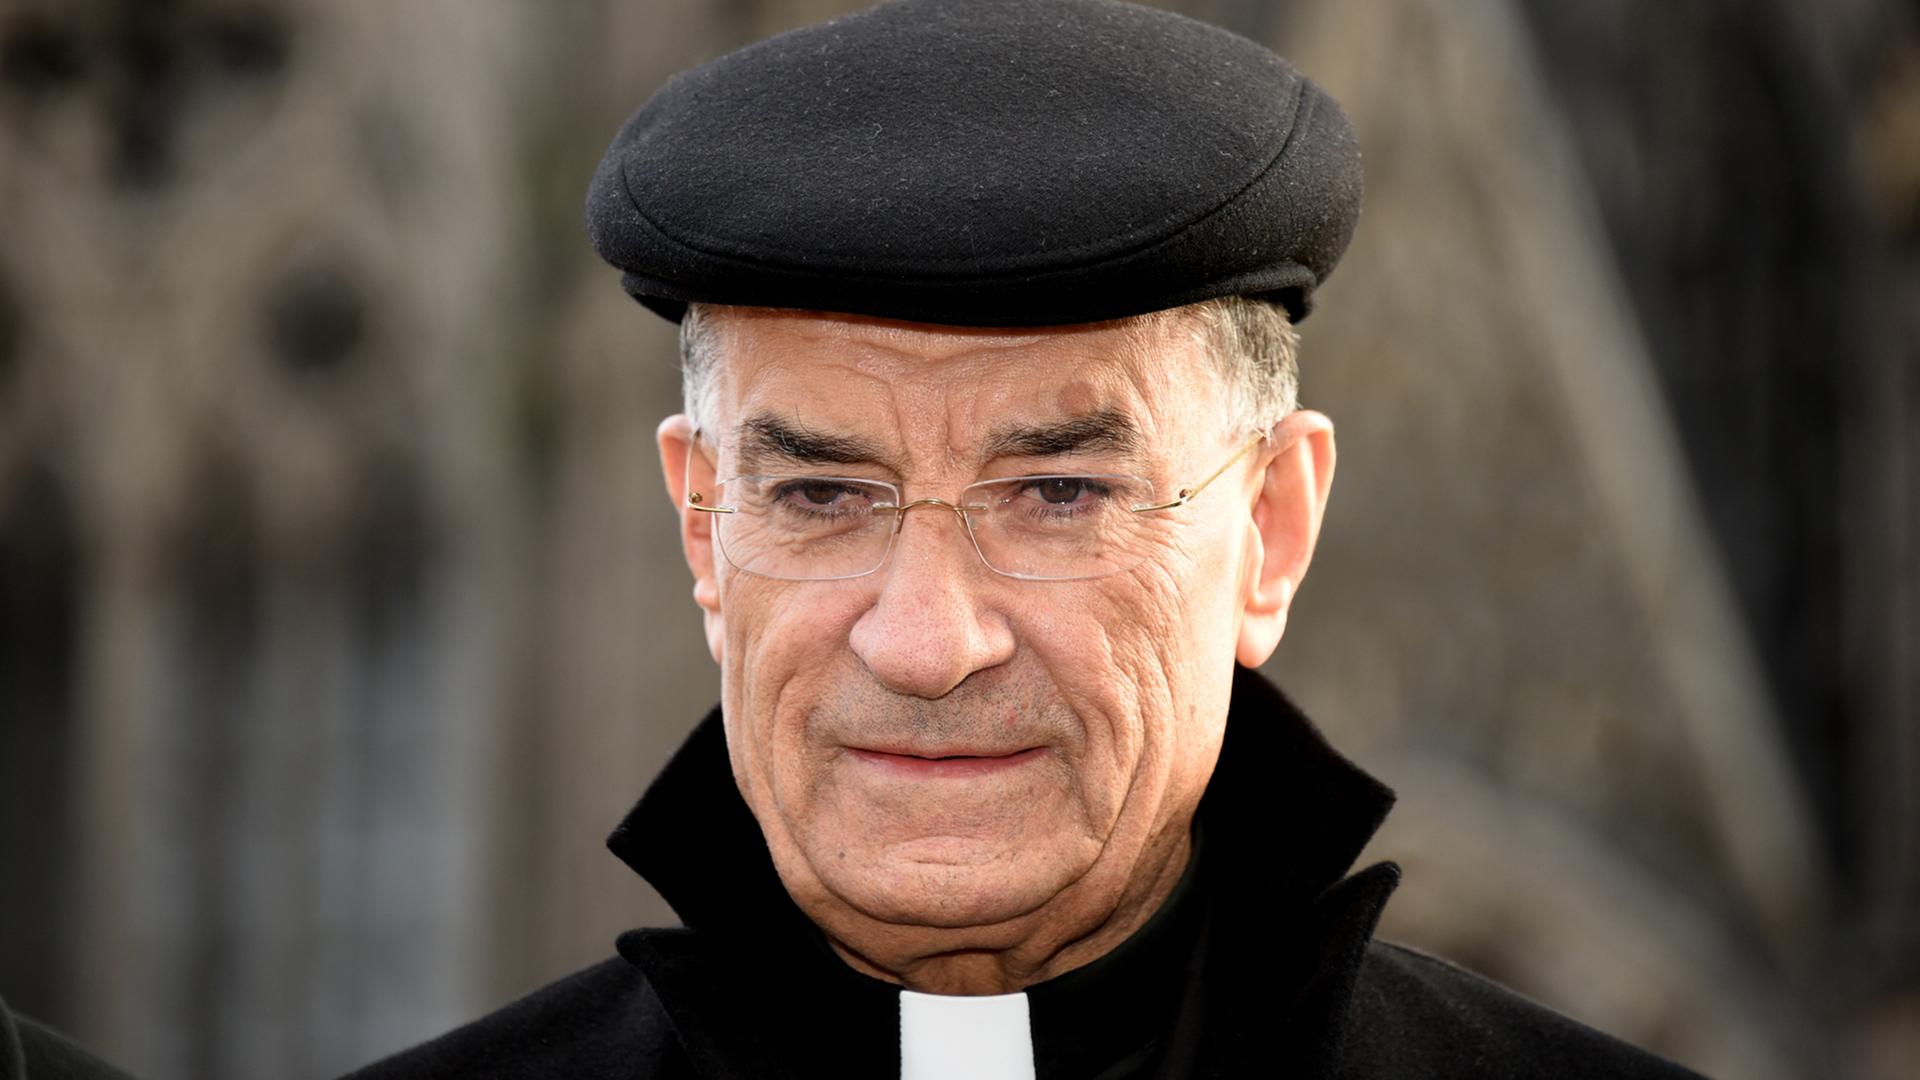 Porträtfoto des Oberhaupts der maronitischen Christen des Libanon, des Patriarchen Béchara Pierre Kardinal Raï